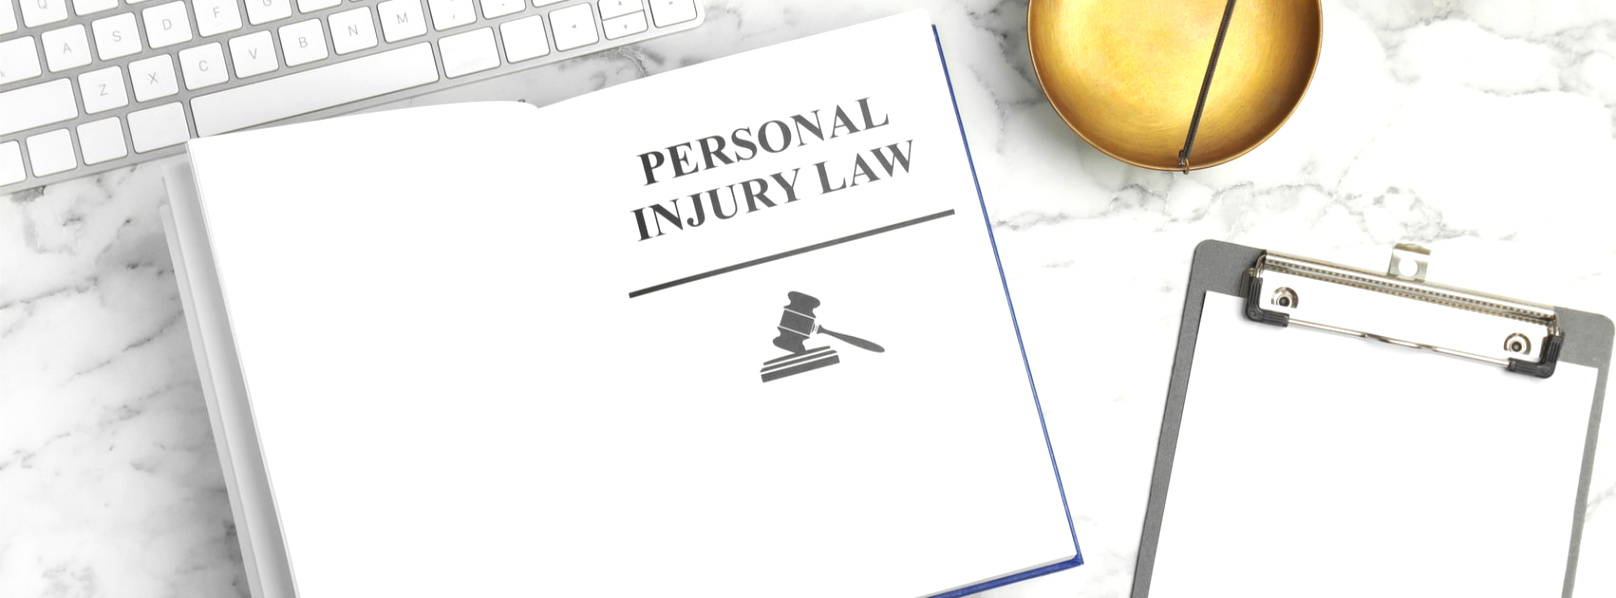 Personal Injury Lawyer Anaheim Dans Irvine Personal Injury attorney - Heidari Law Group